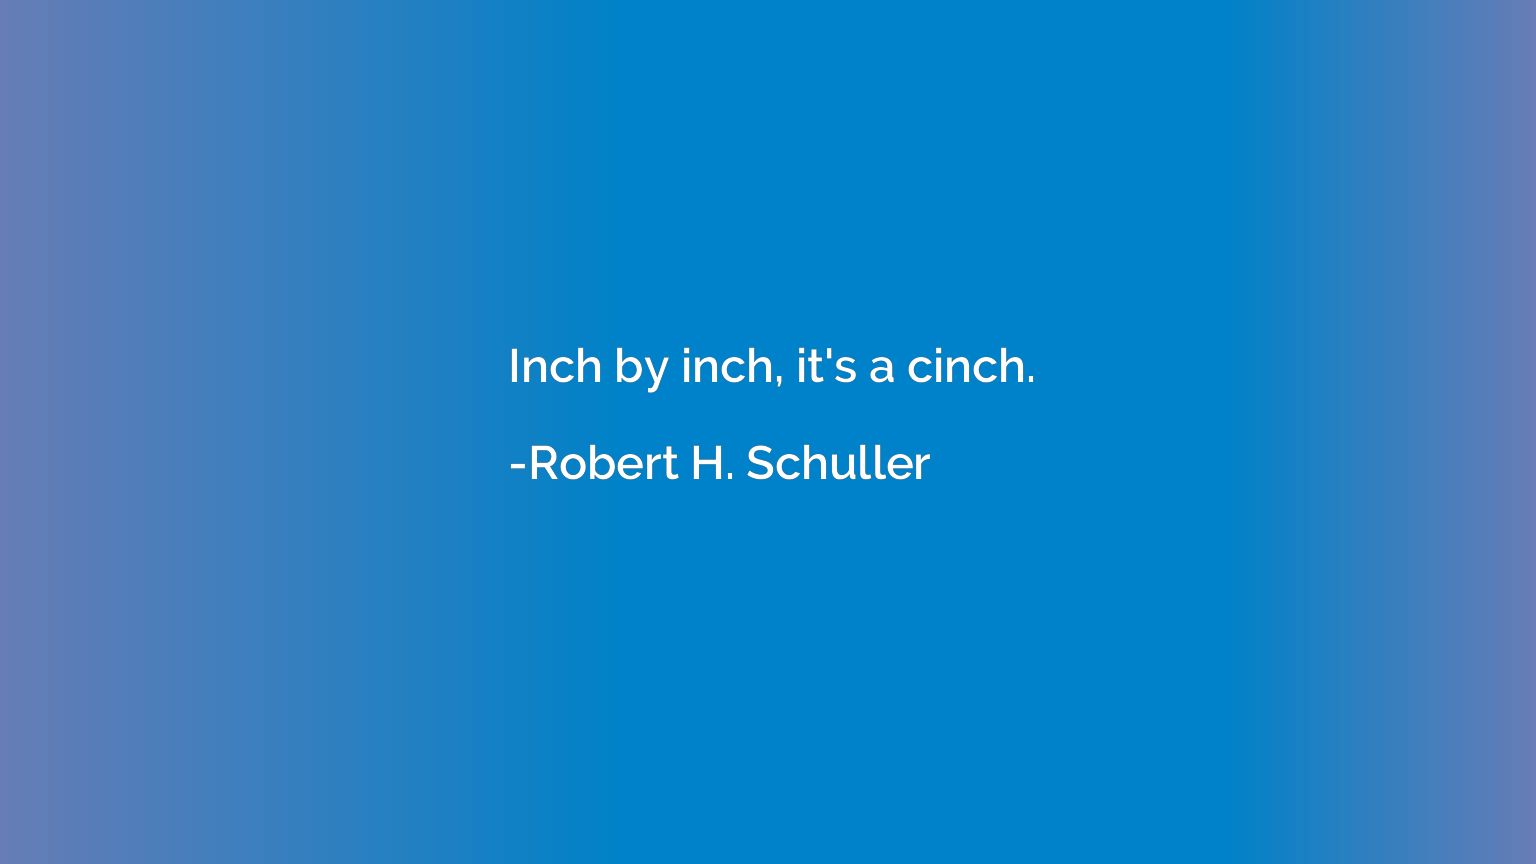 Inch by inch, it's a cinch.